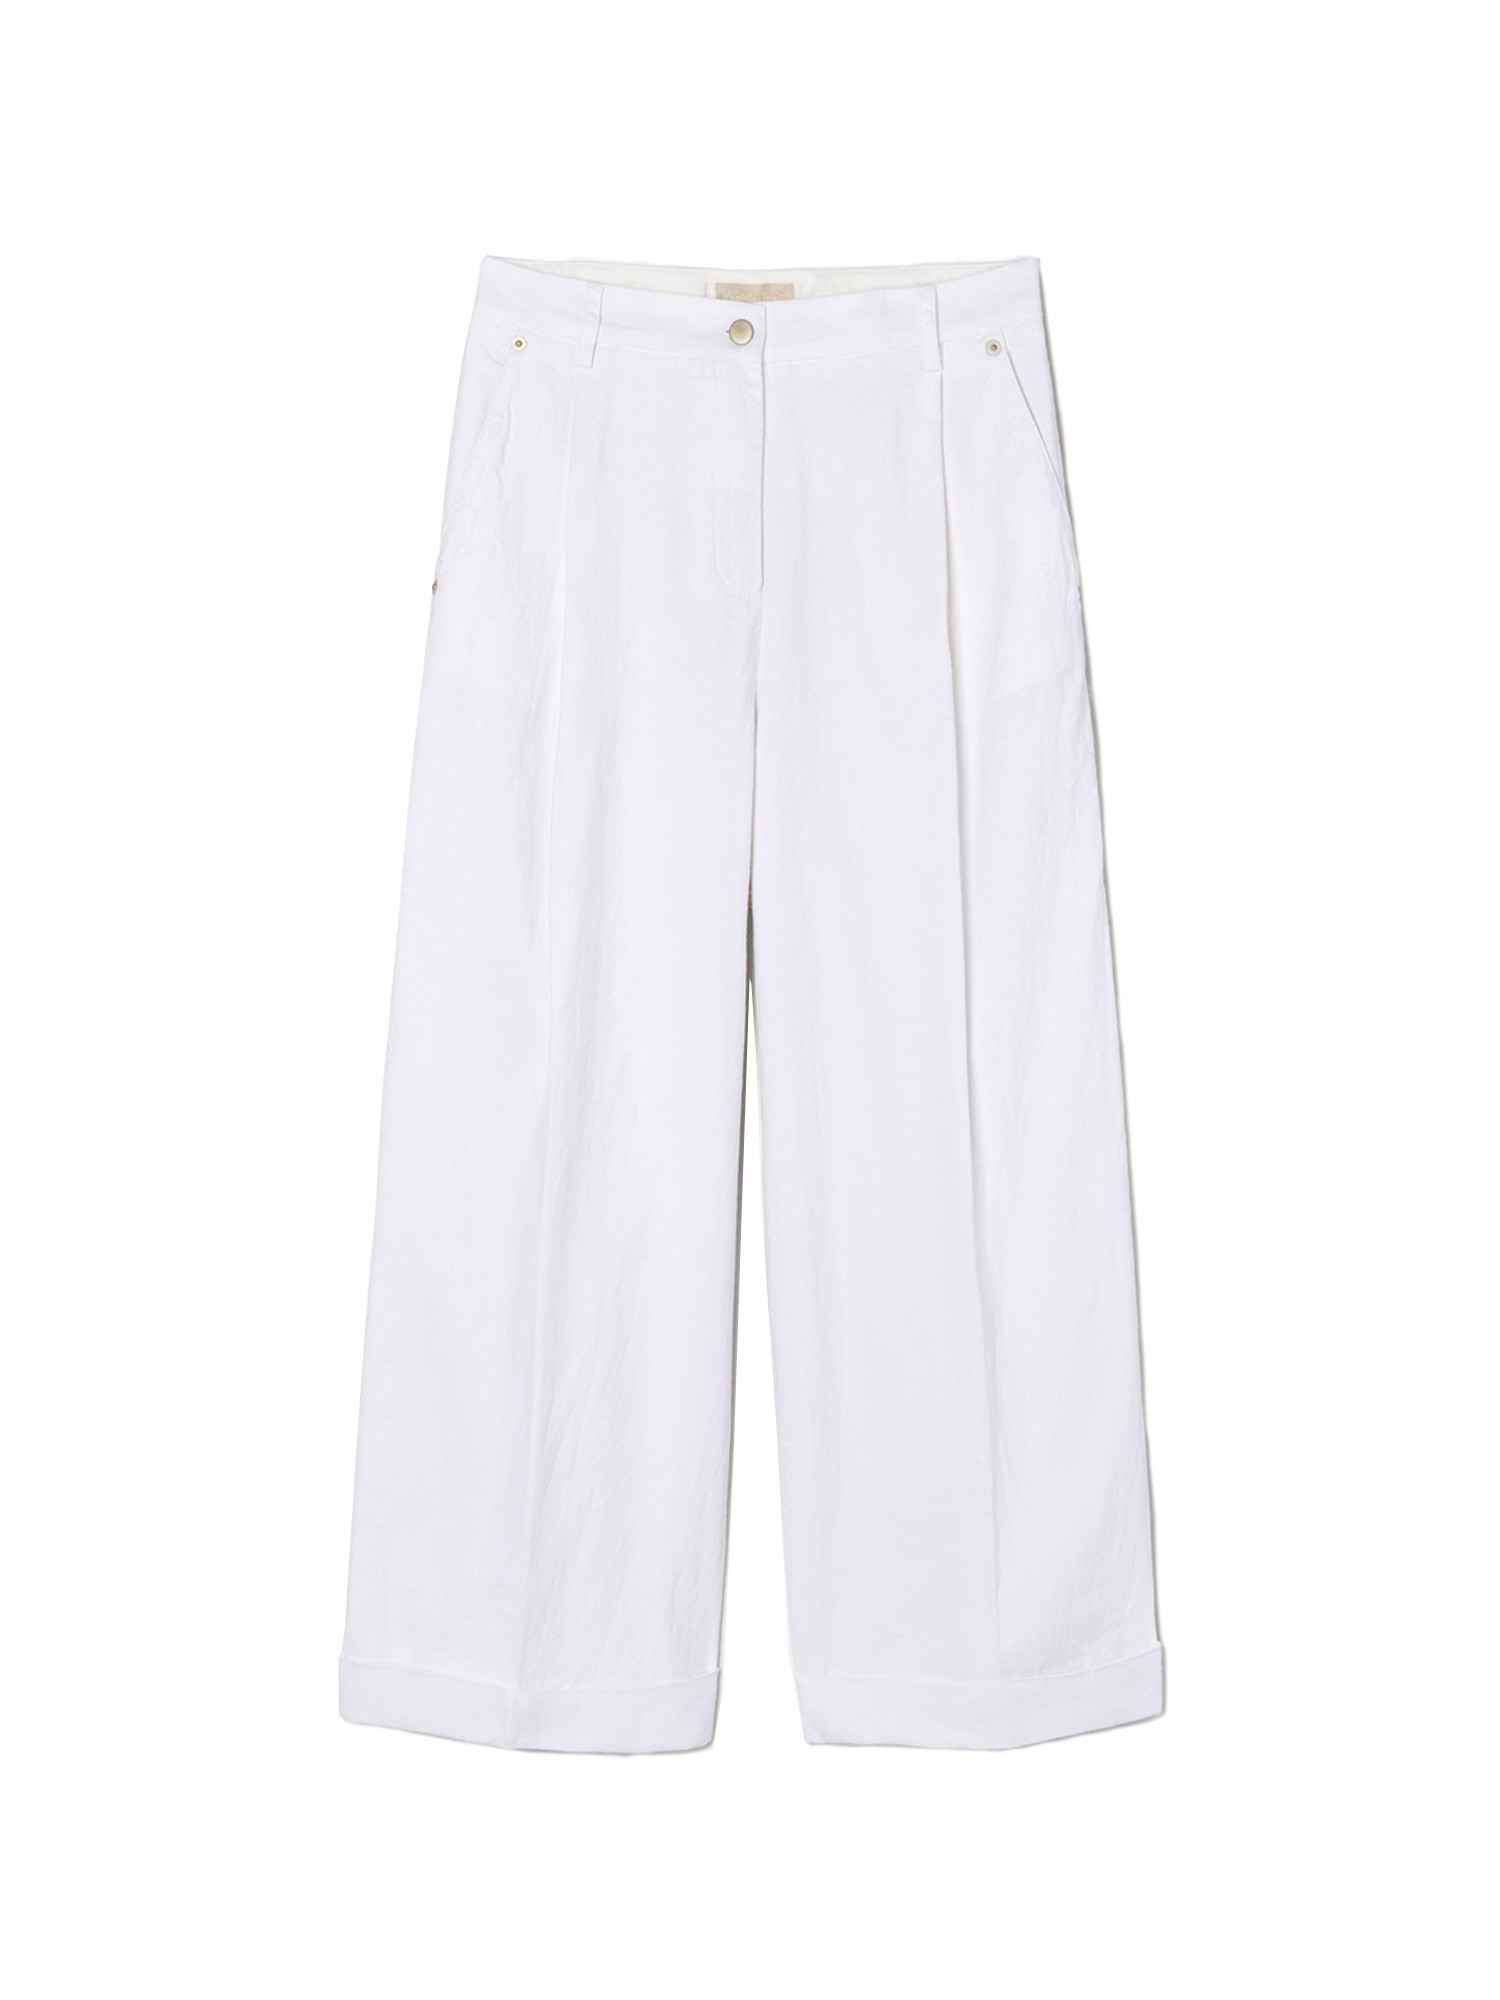 Momonì - Pantaloni Grecale in denim stretch leggero, Bianco, large image number 0